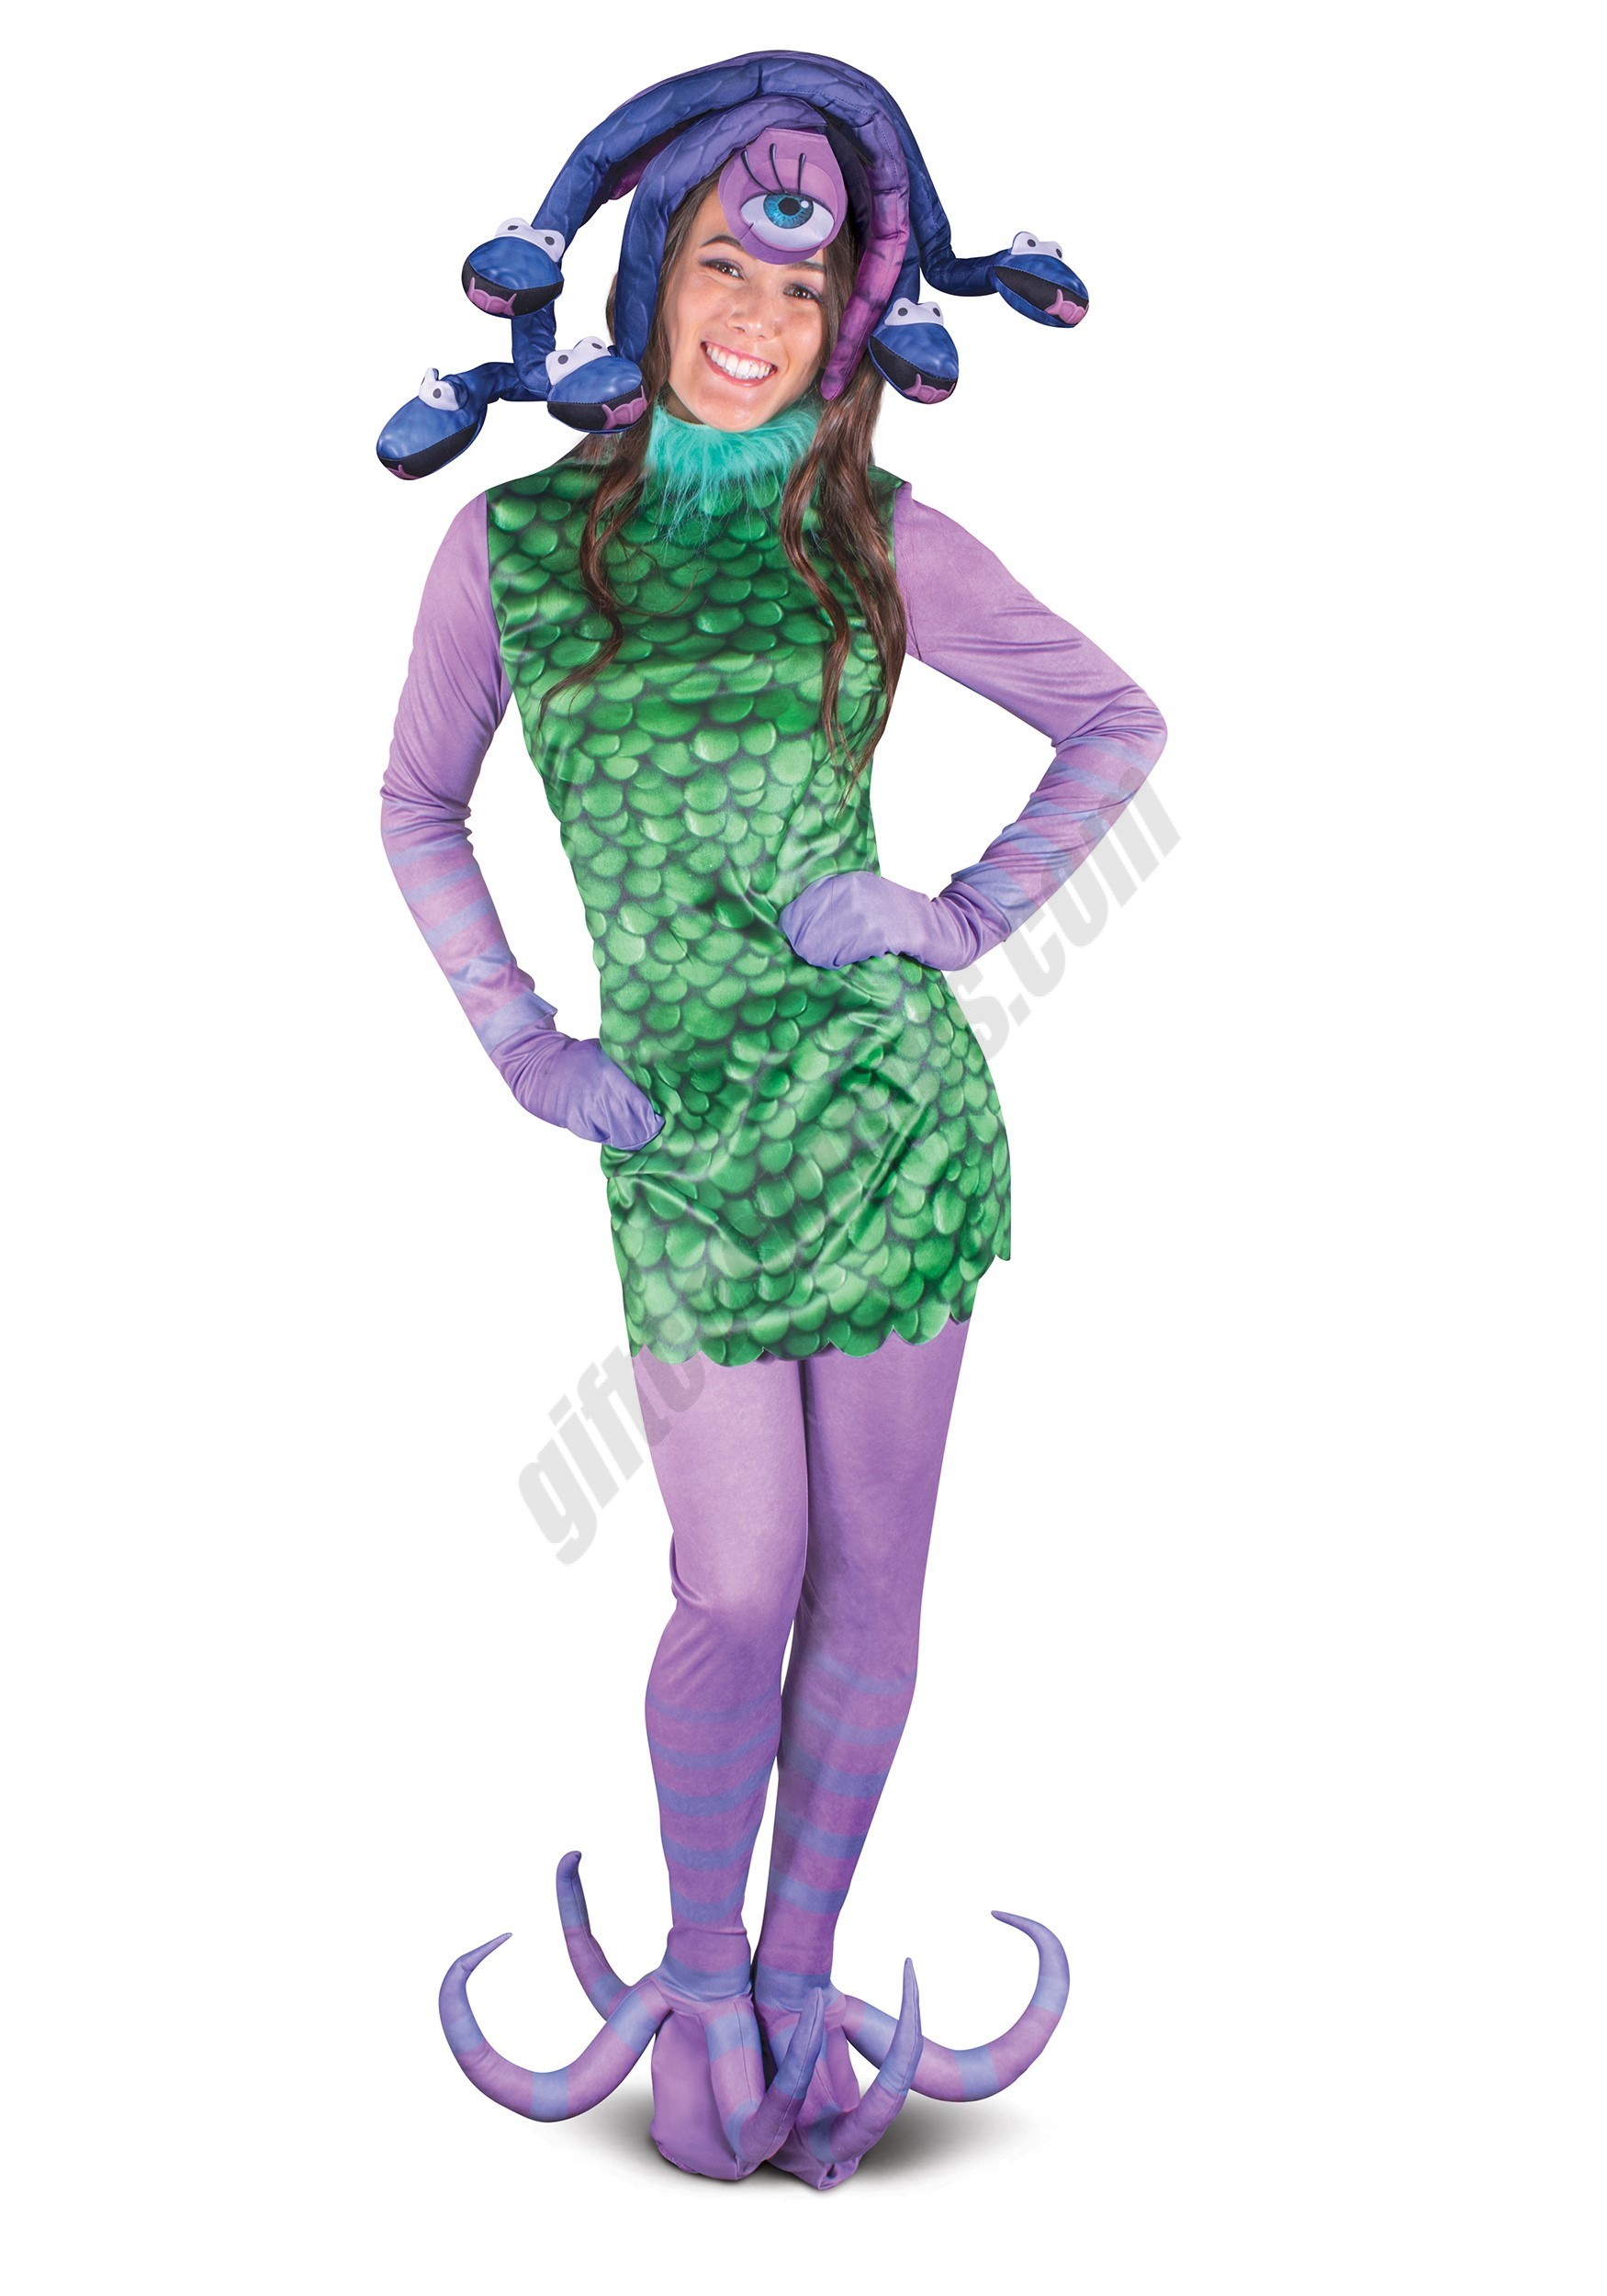 Monsters Inc. Celia Costume for Women - Monsters Inc. Celia Costume for Women